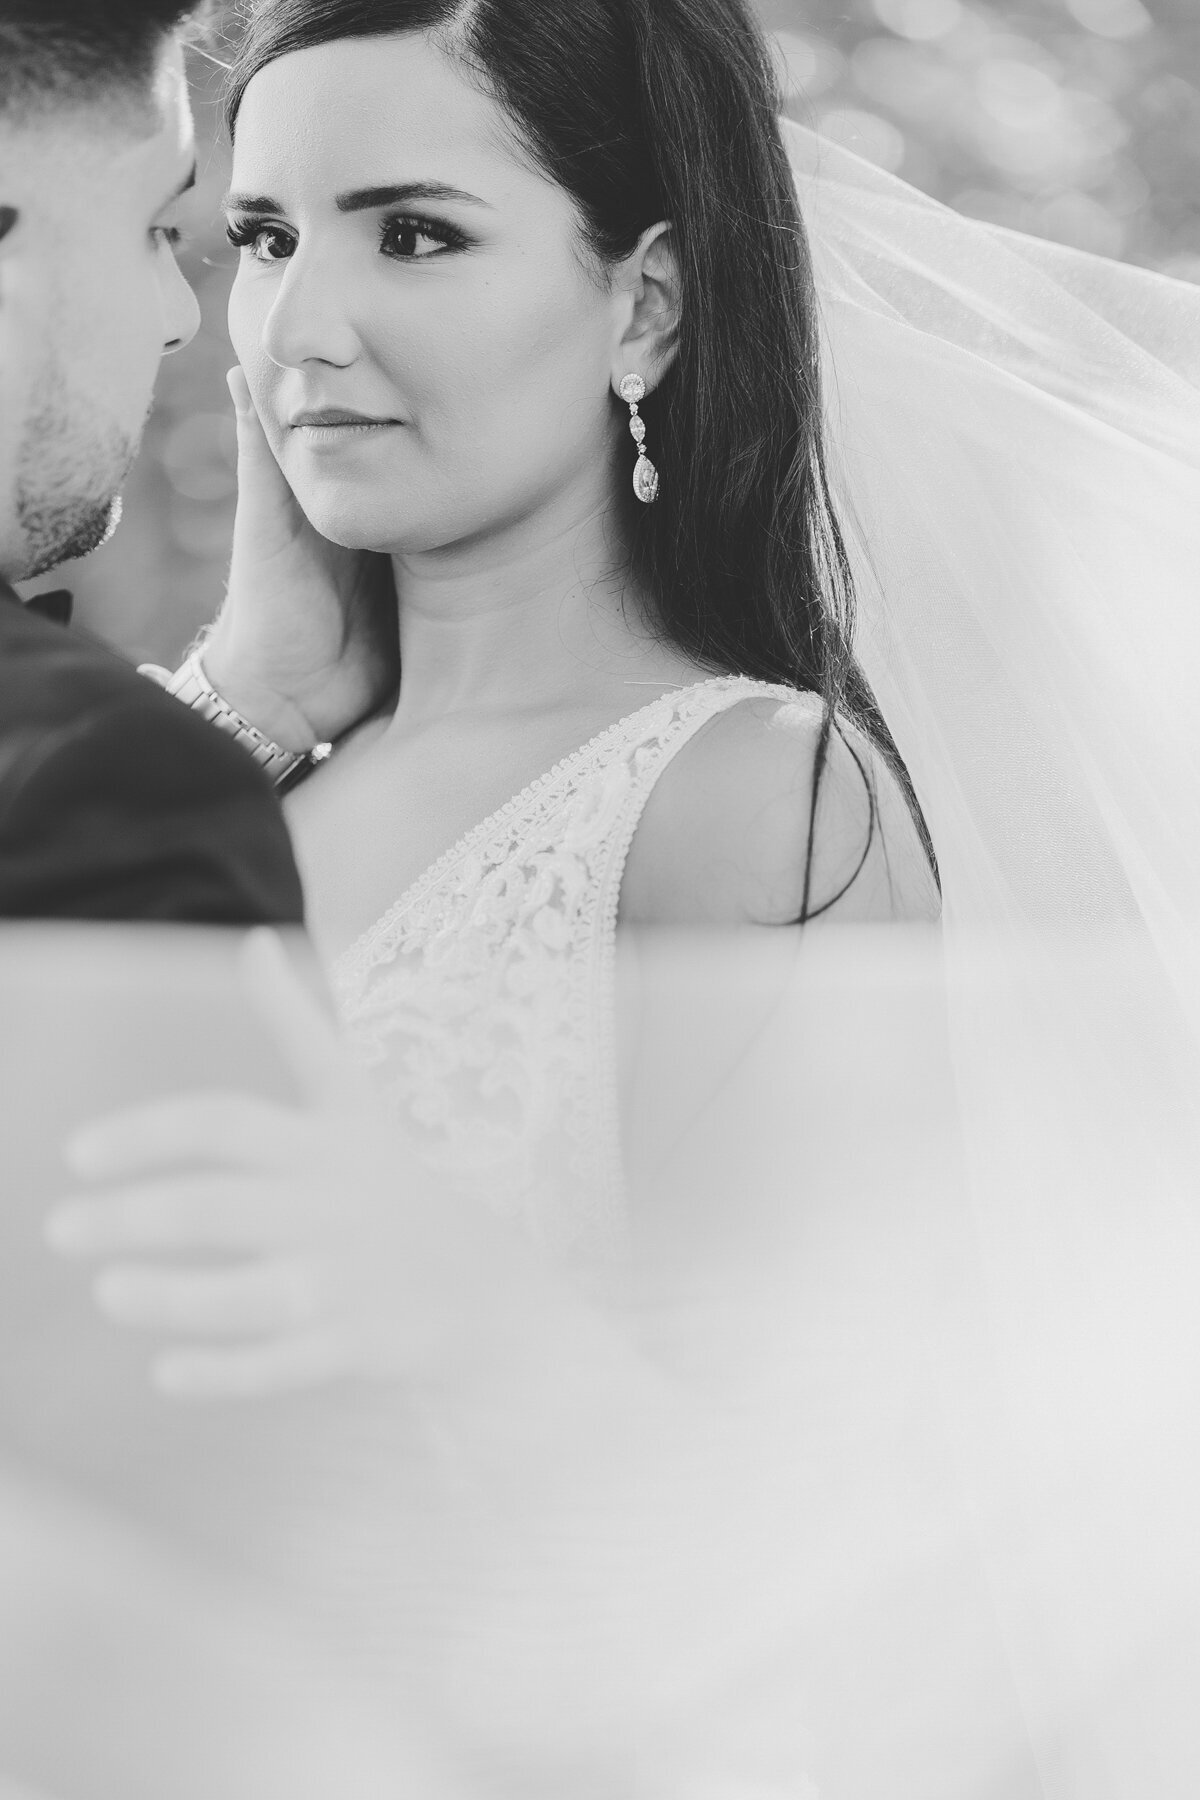 A bride looking deep into her grooms eyes